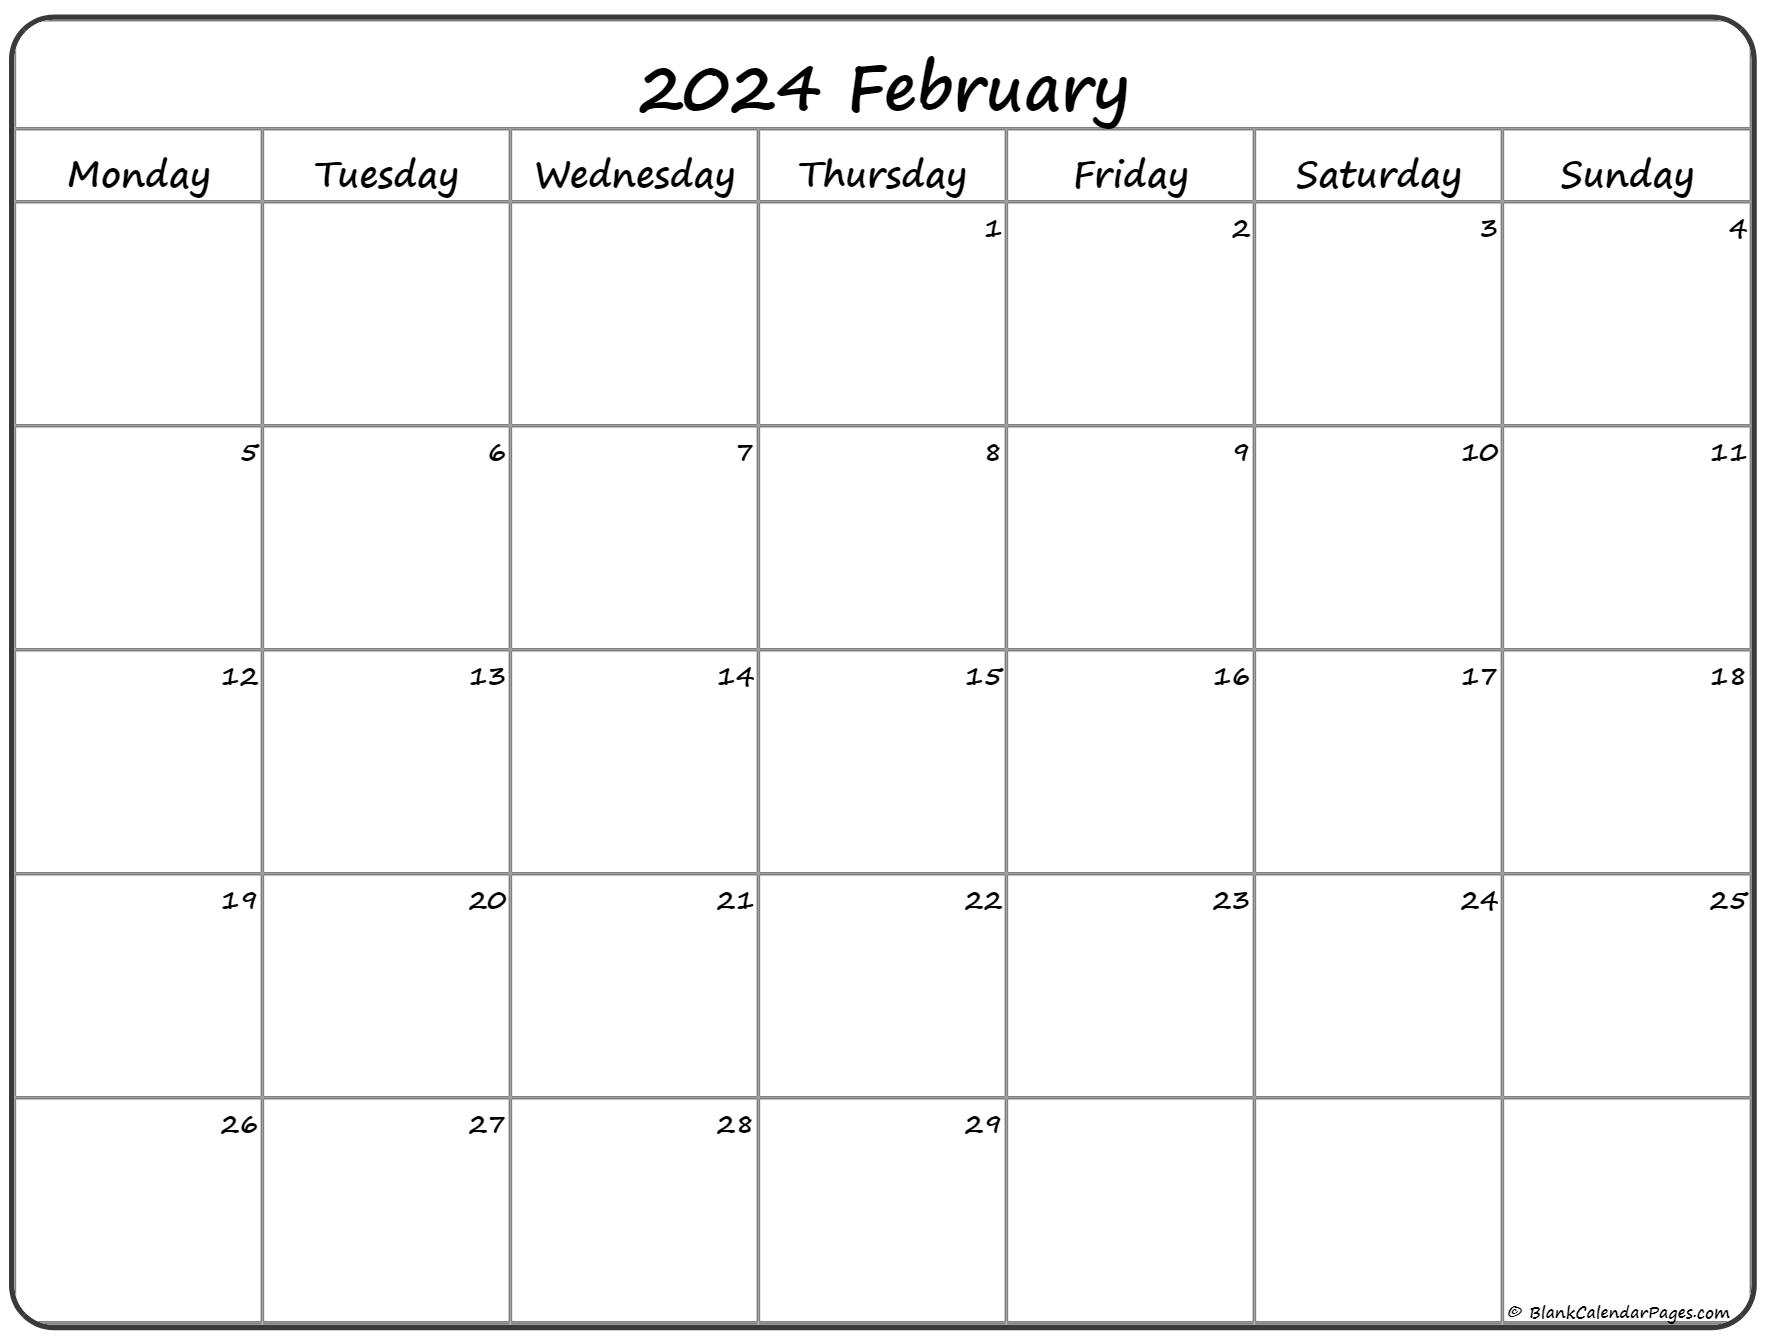 free-2023-calendar-monday-start-download-printable-templates-online-february-2023-monday